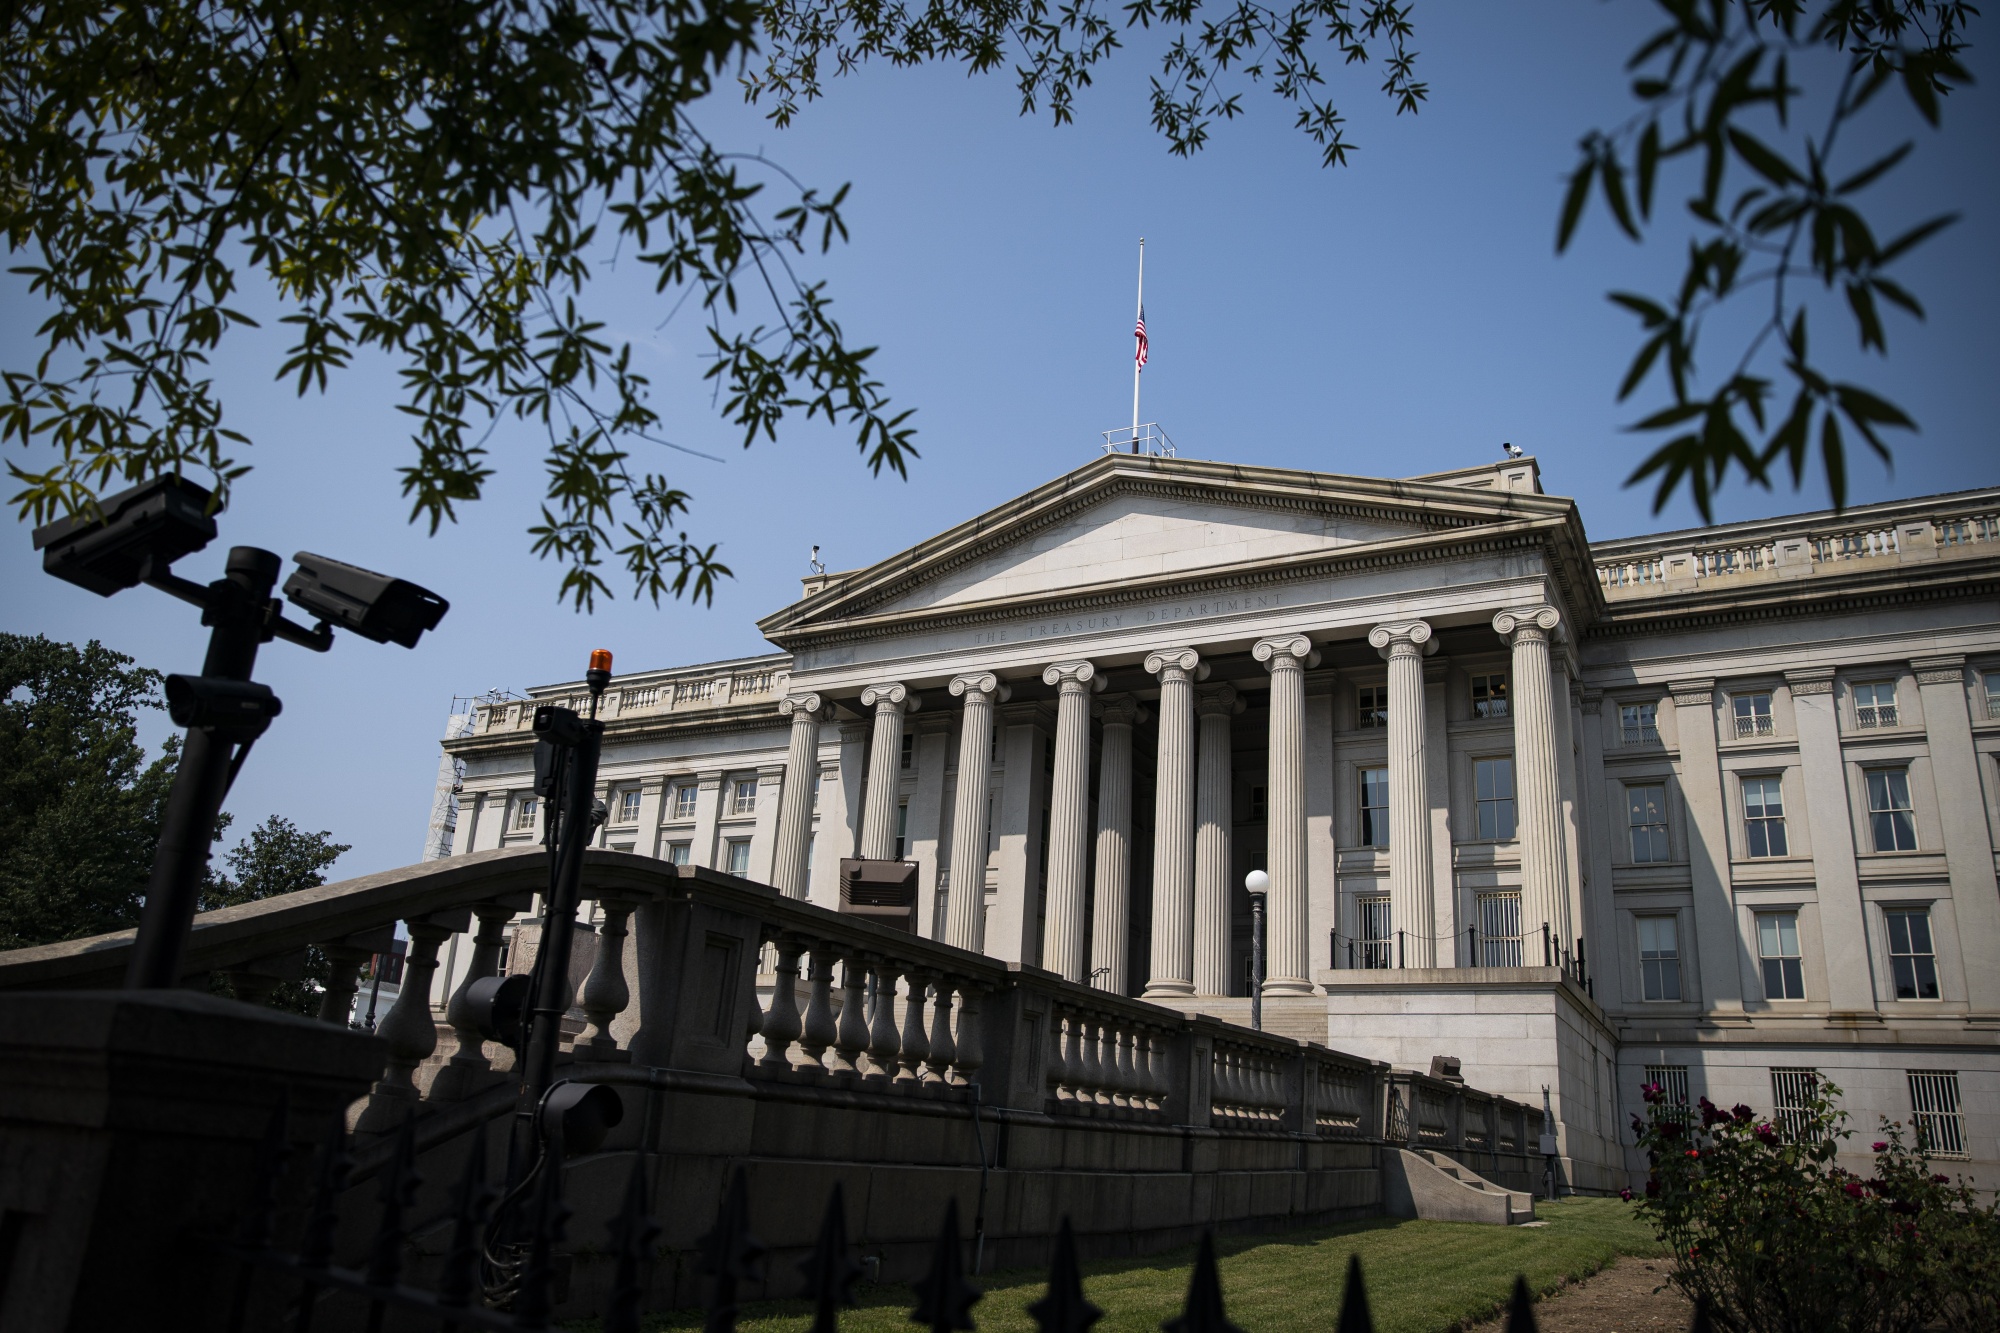 The US Treasury Department in Washington, D.C.